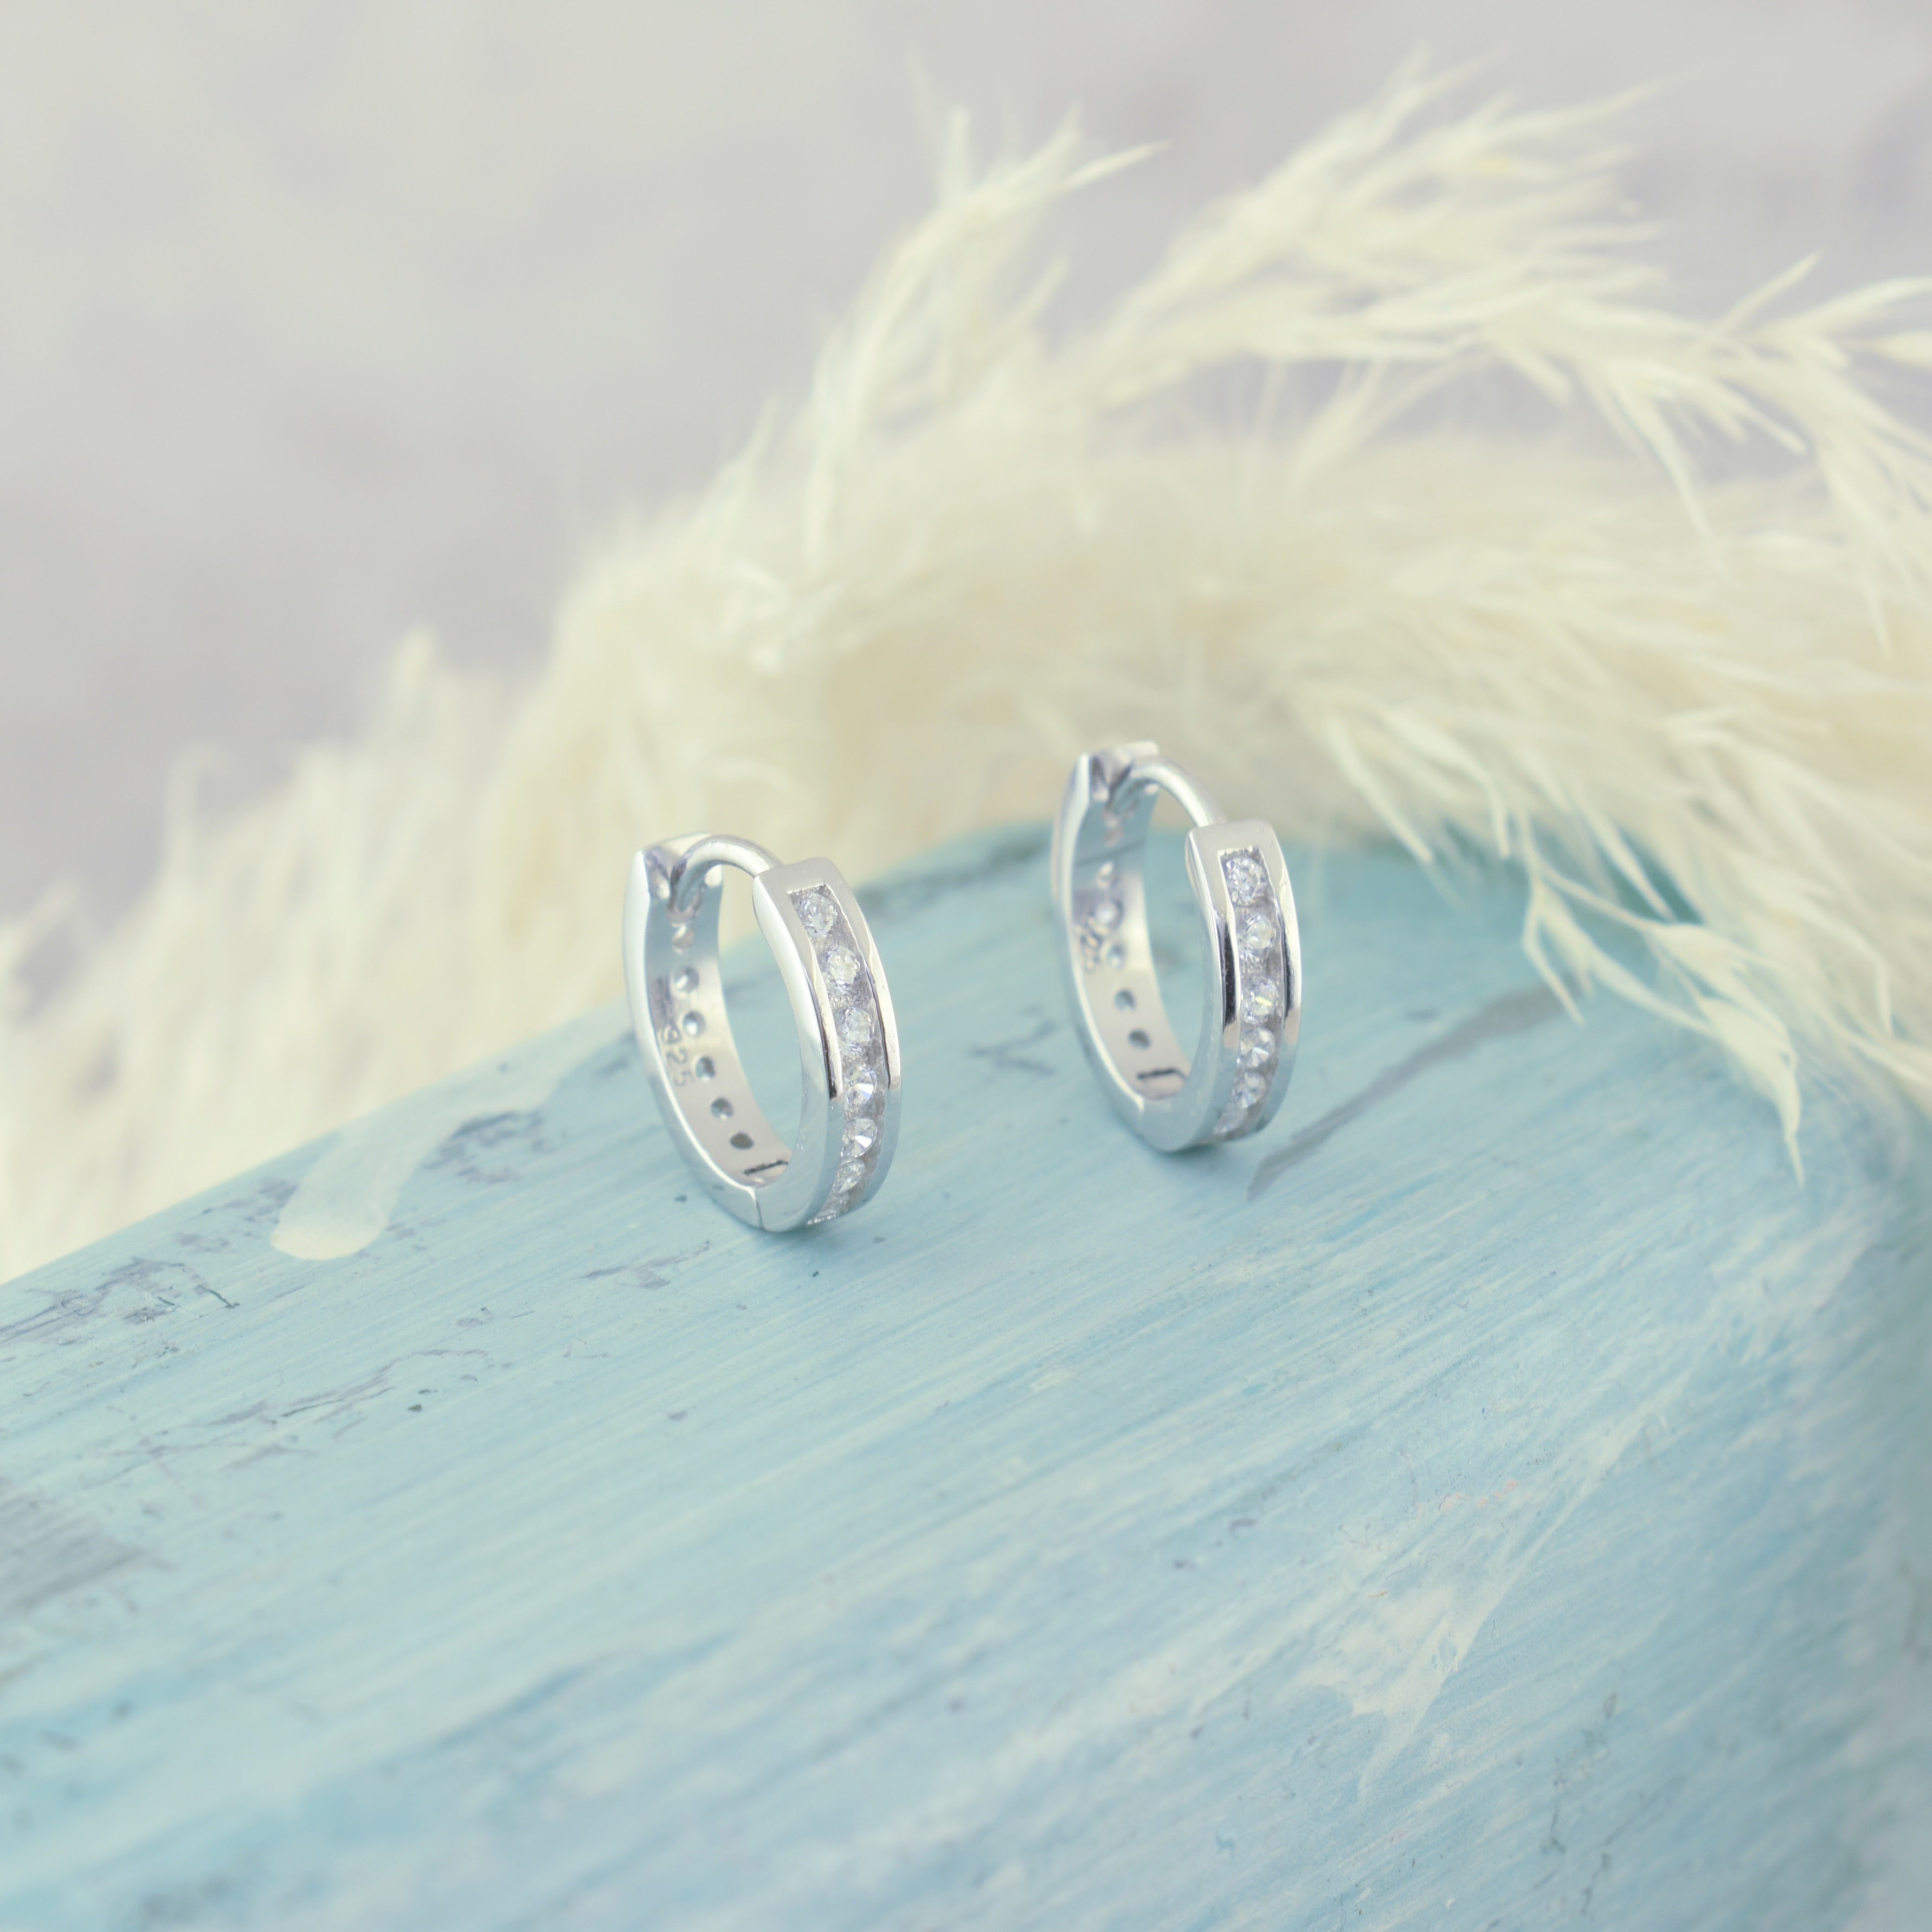 dainty .925 sterling silver hoop earrings featuring cubic zirconia